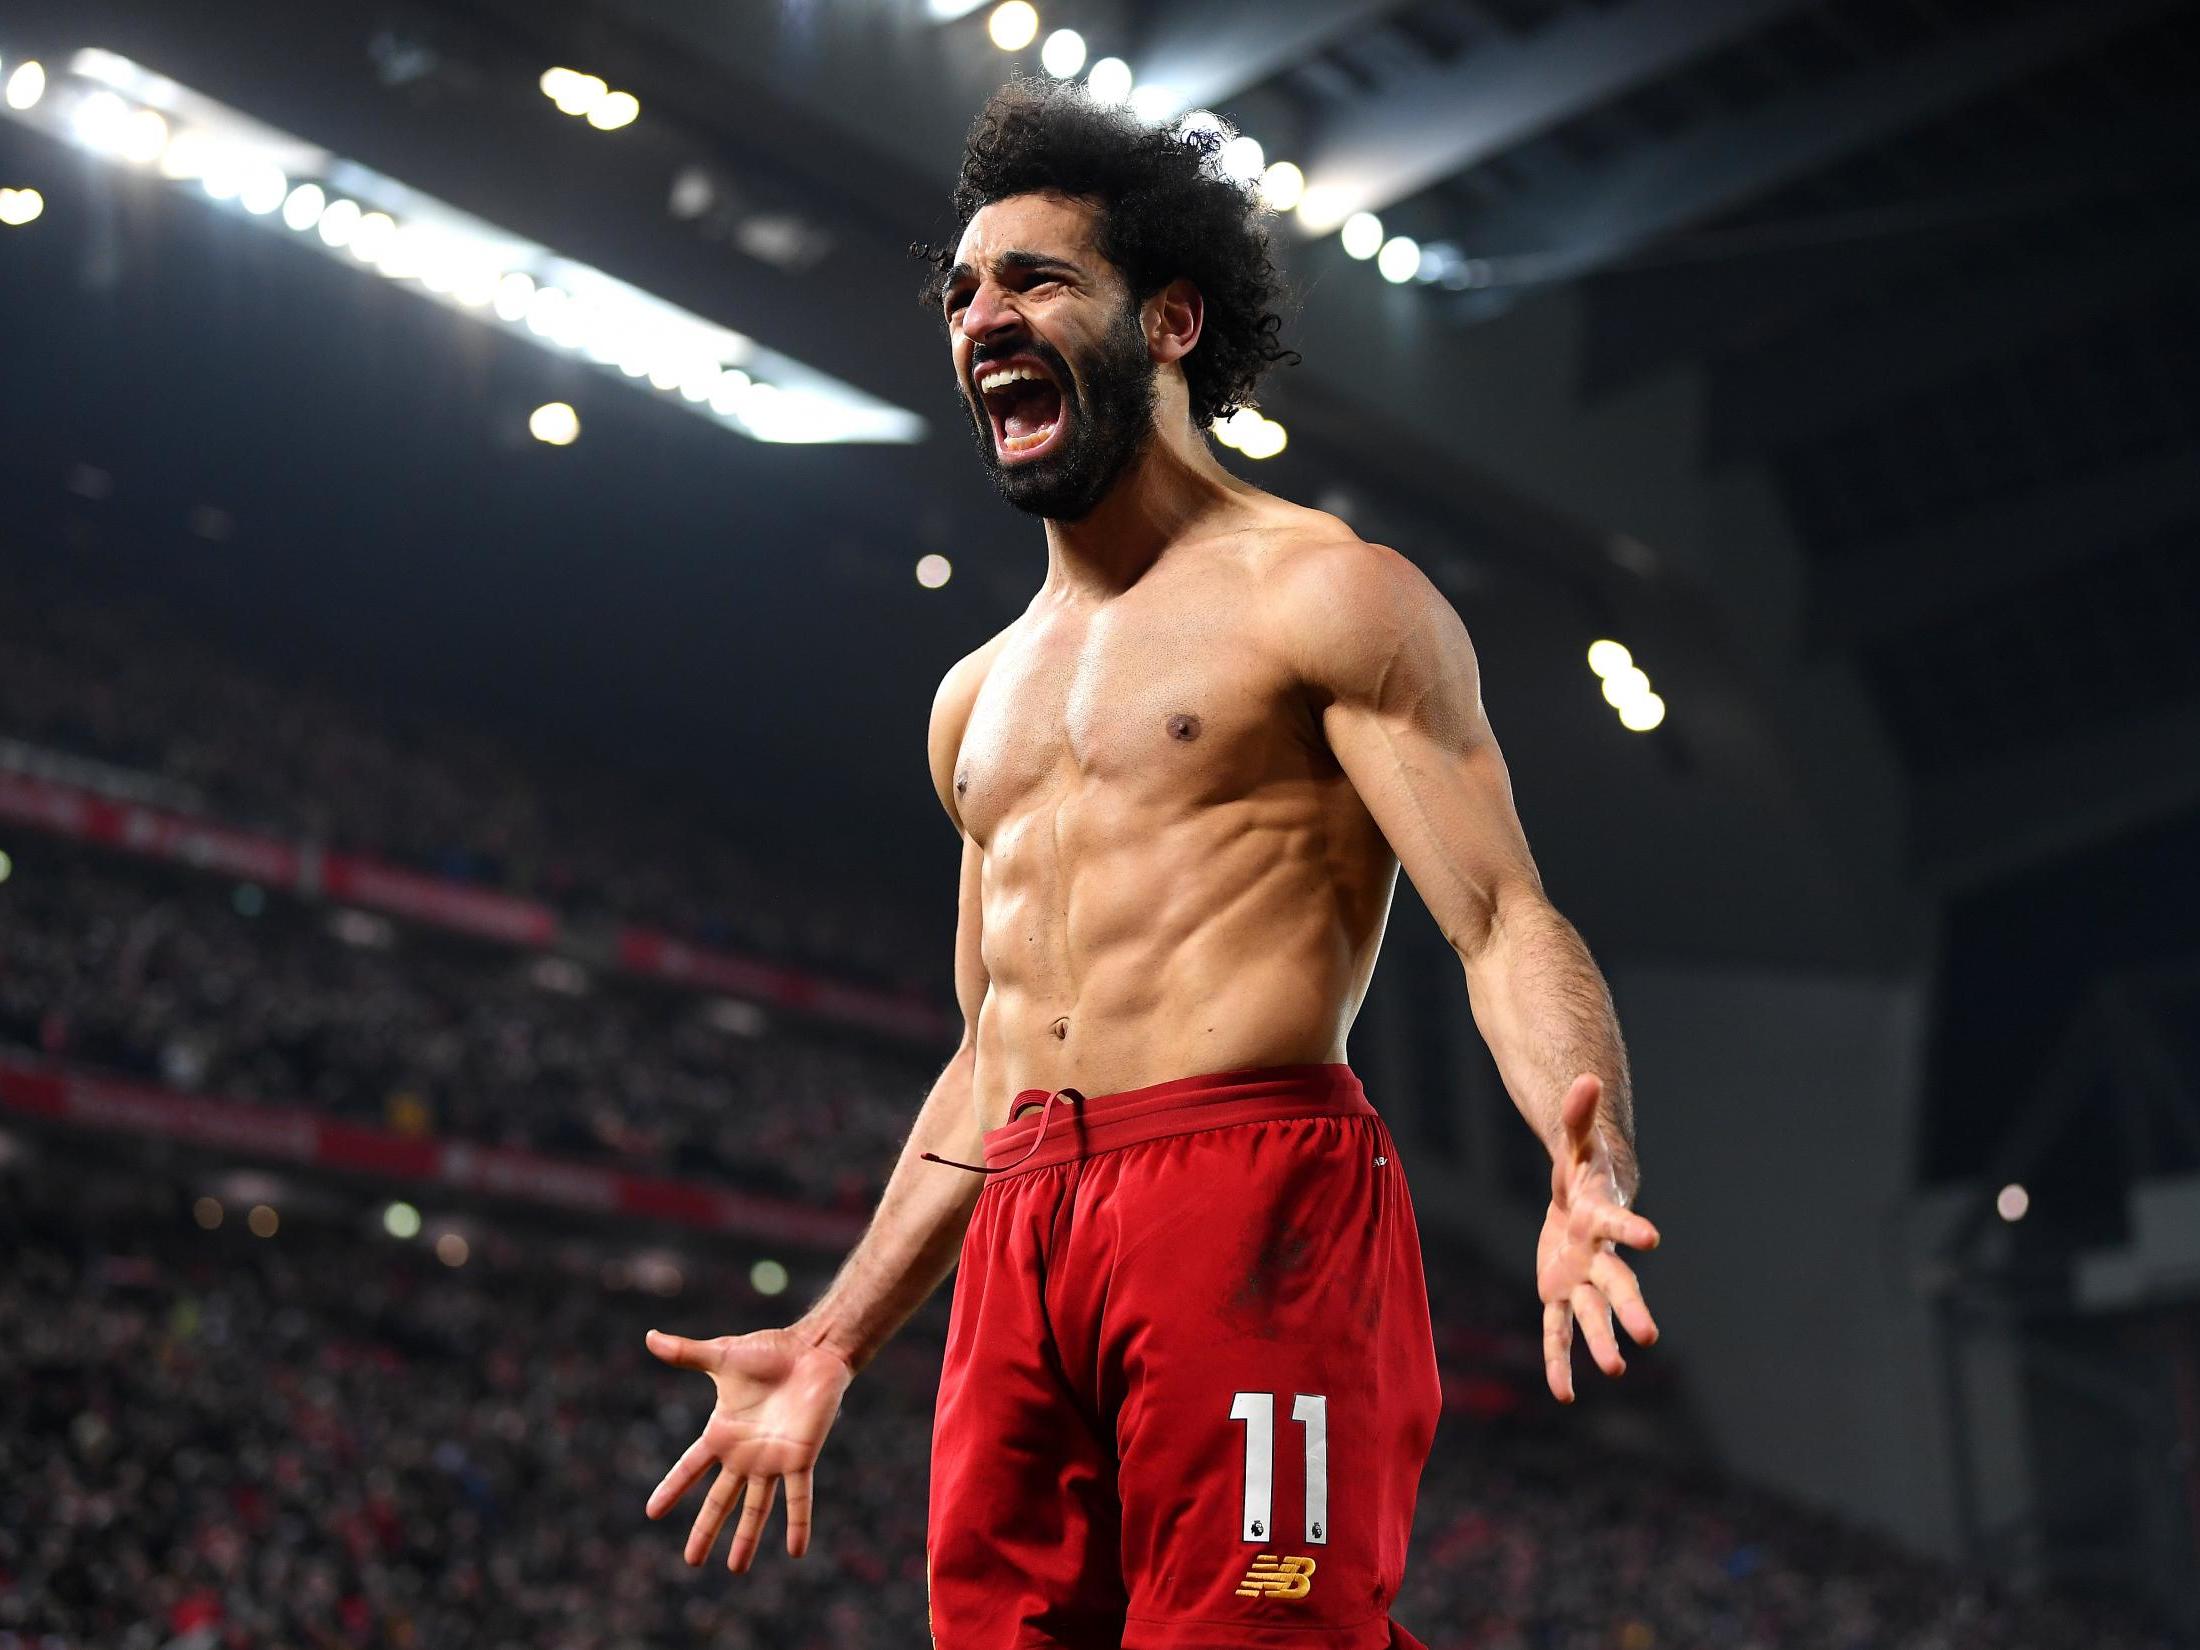 Mohamed Salah of Liverpool celebrates